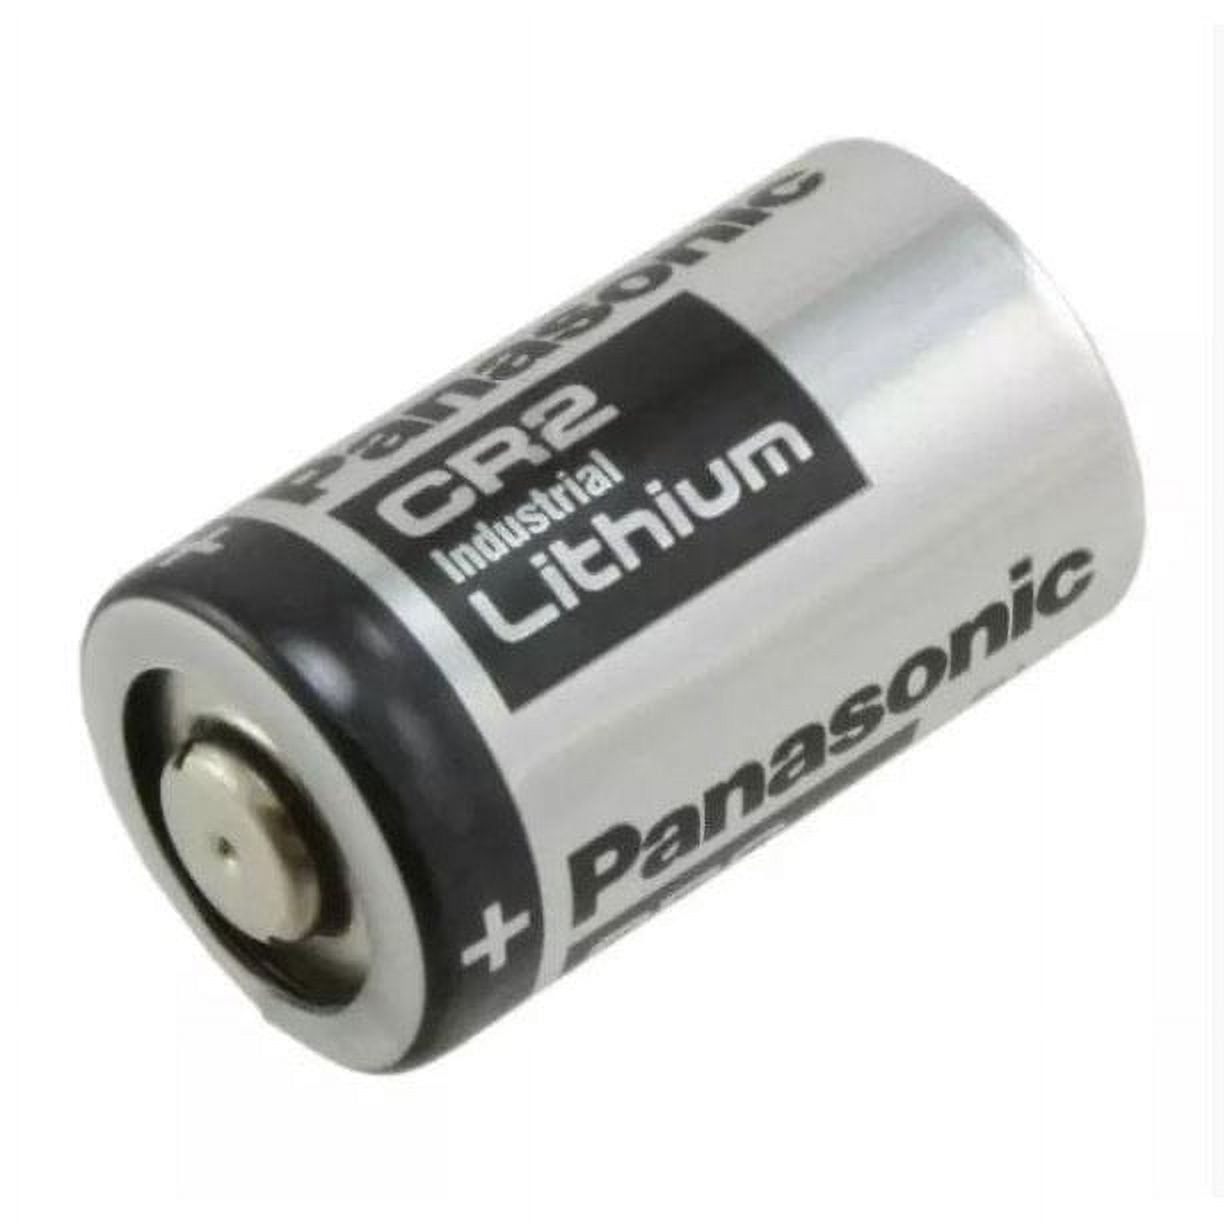 Pile CR2 Lithium 3V lot de 10 piles CR2 Panasonic batterie CR2 Photo pile  CR-2